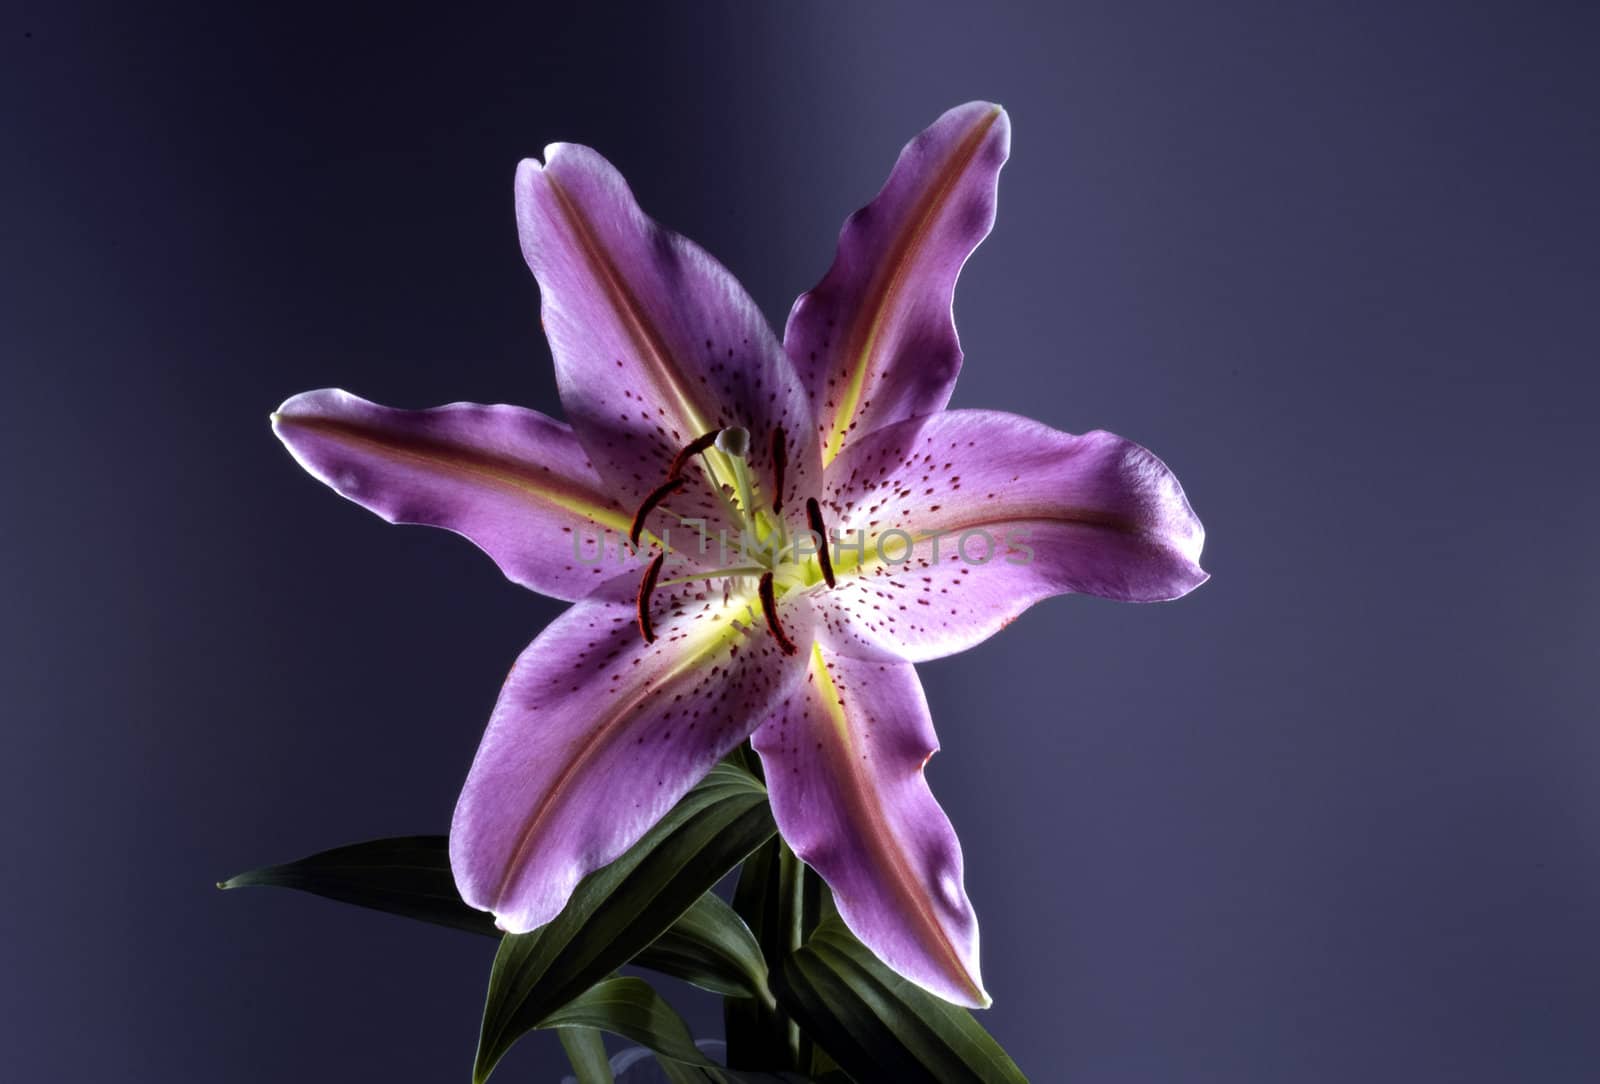 Lily flower photograph taken under studio lighting